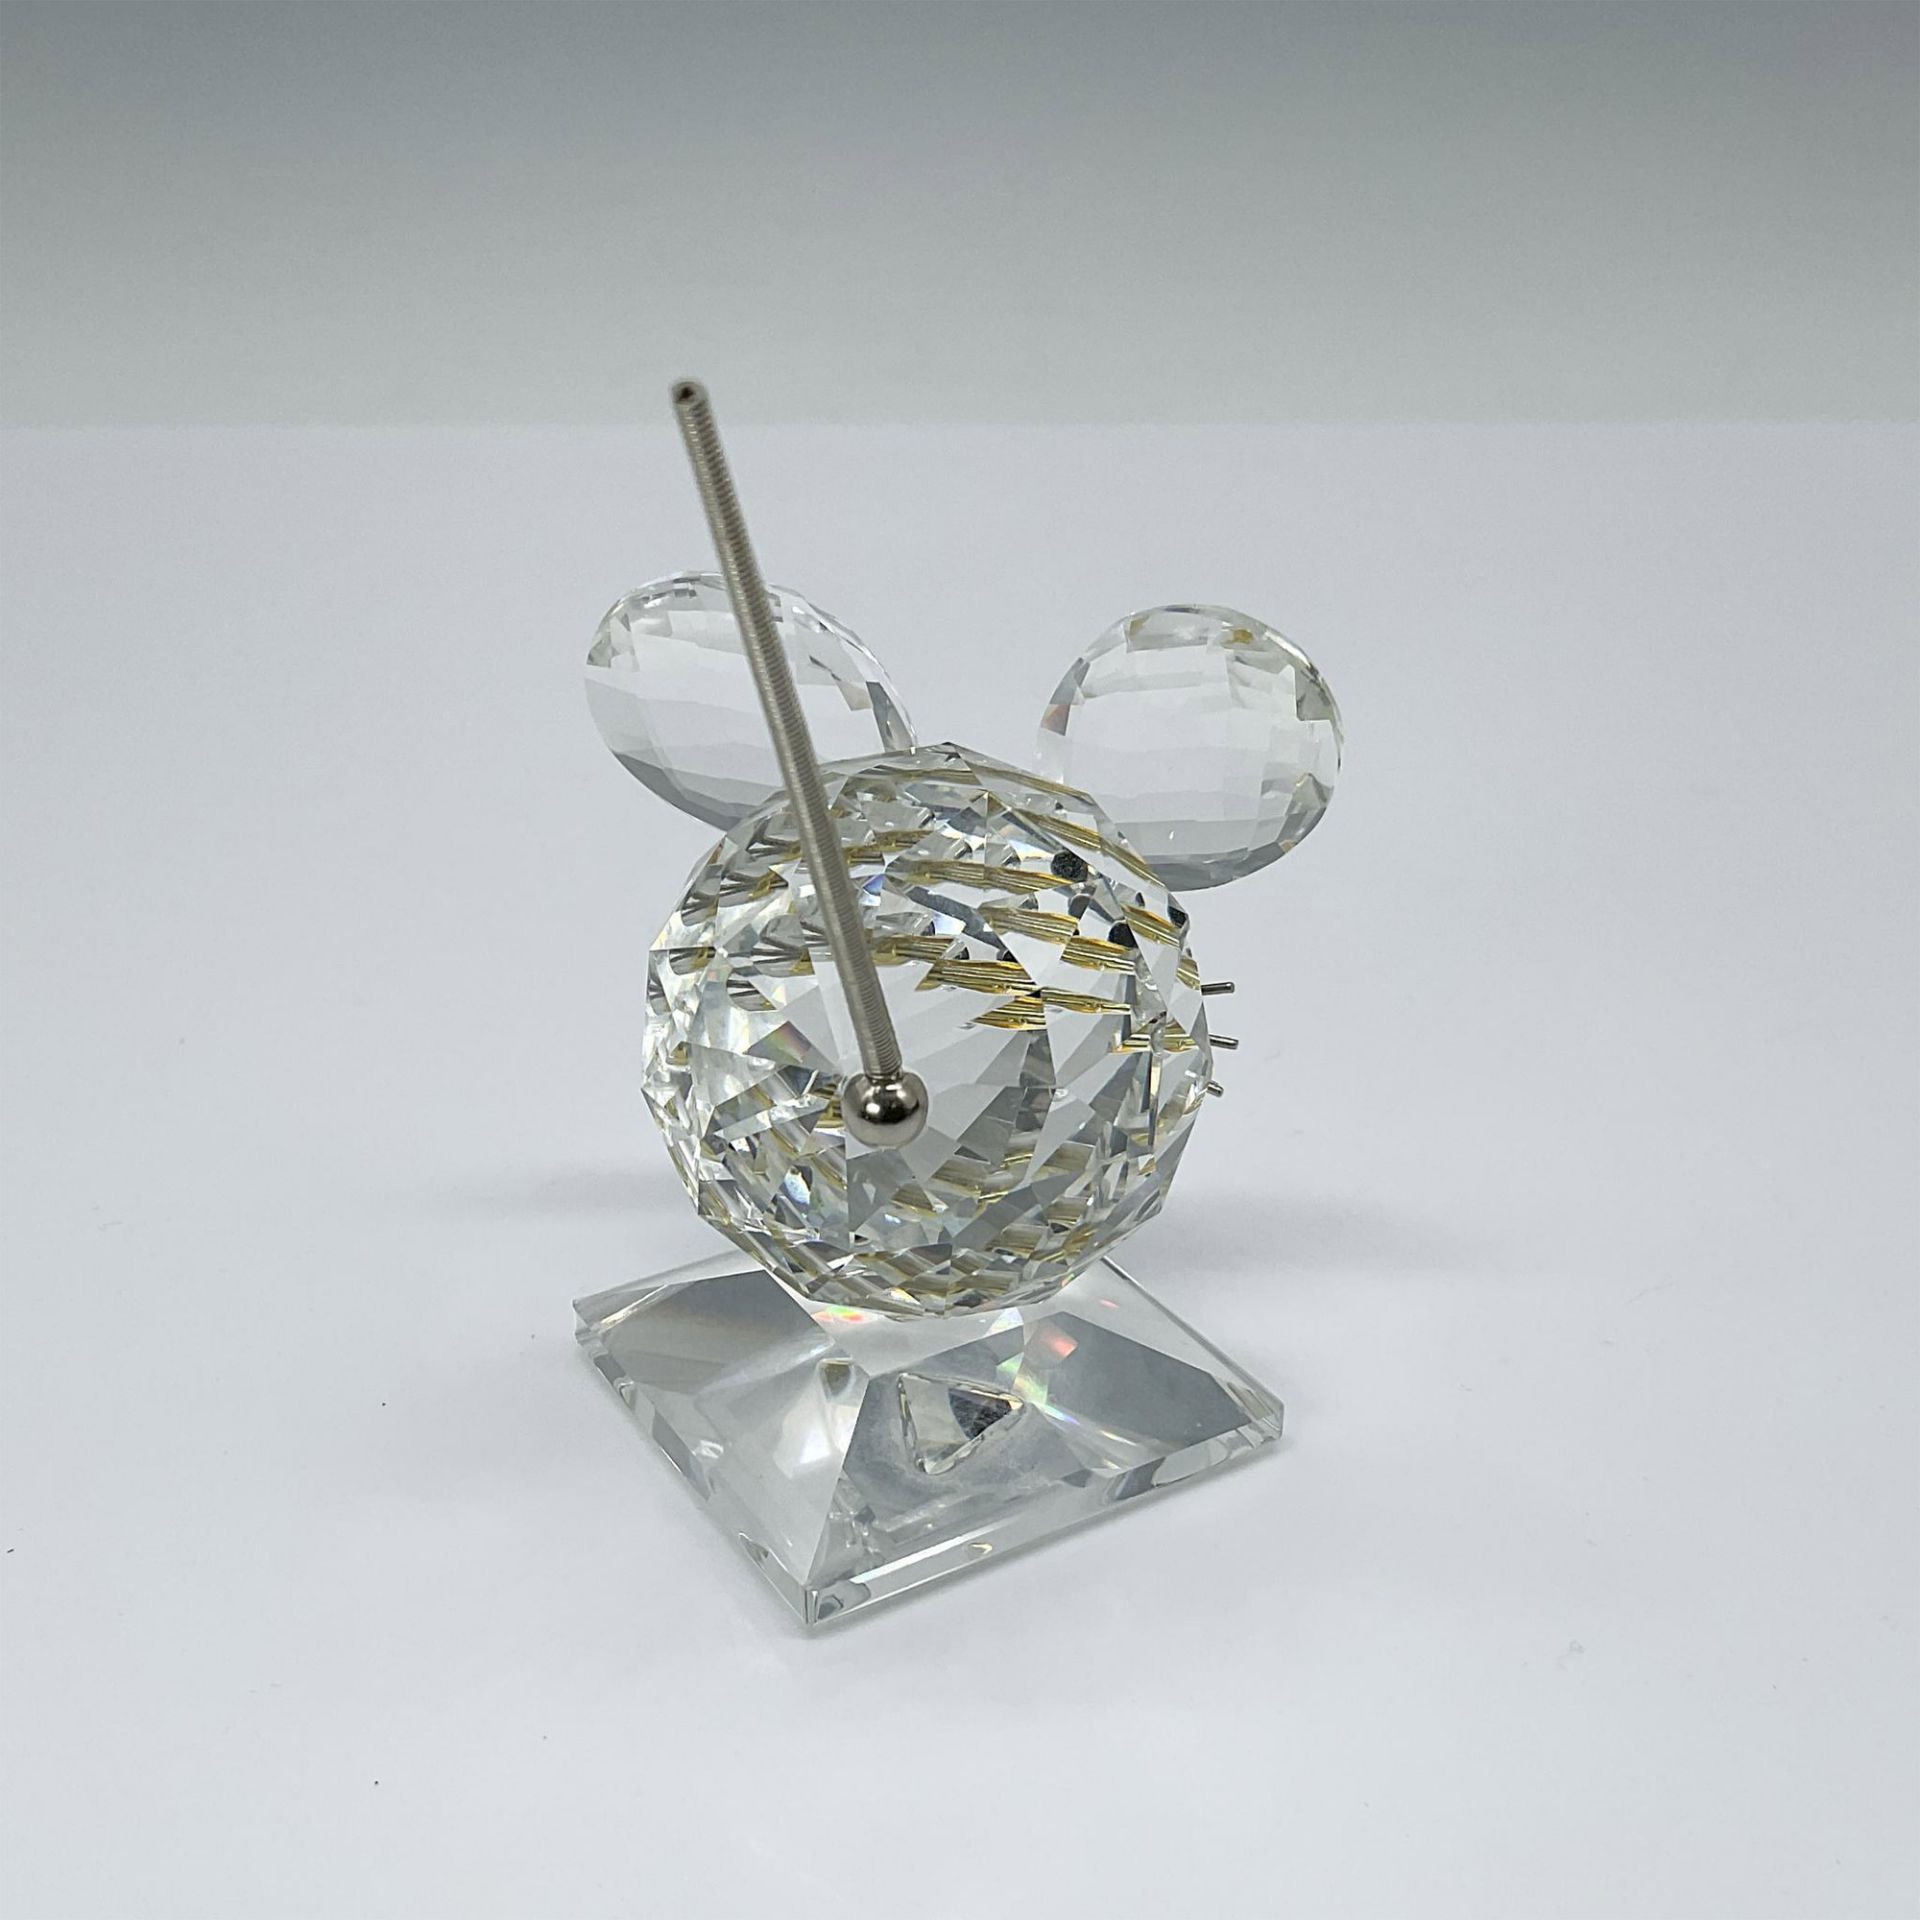 Swarovski Crystal Figurine, Mouse King - Image 2 of 3